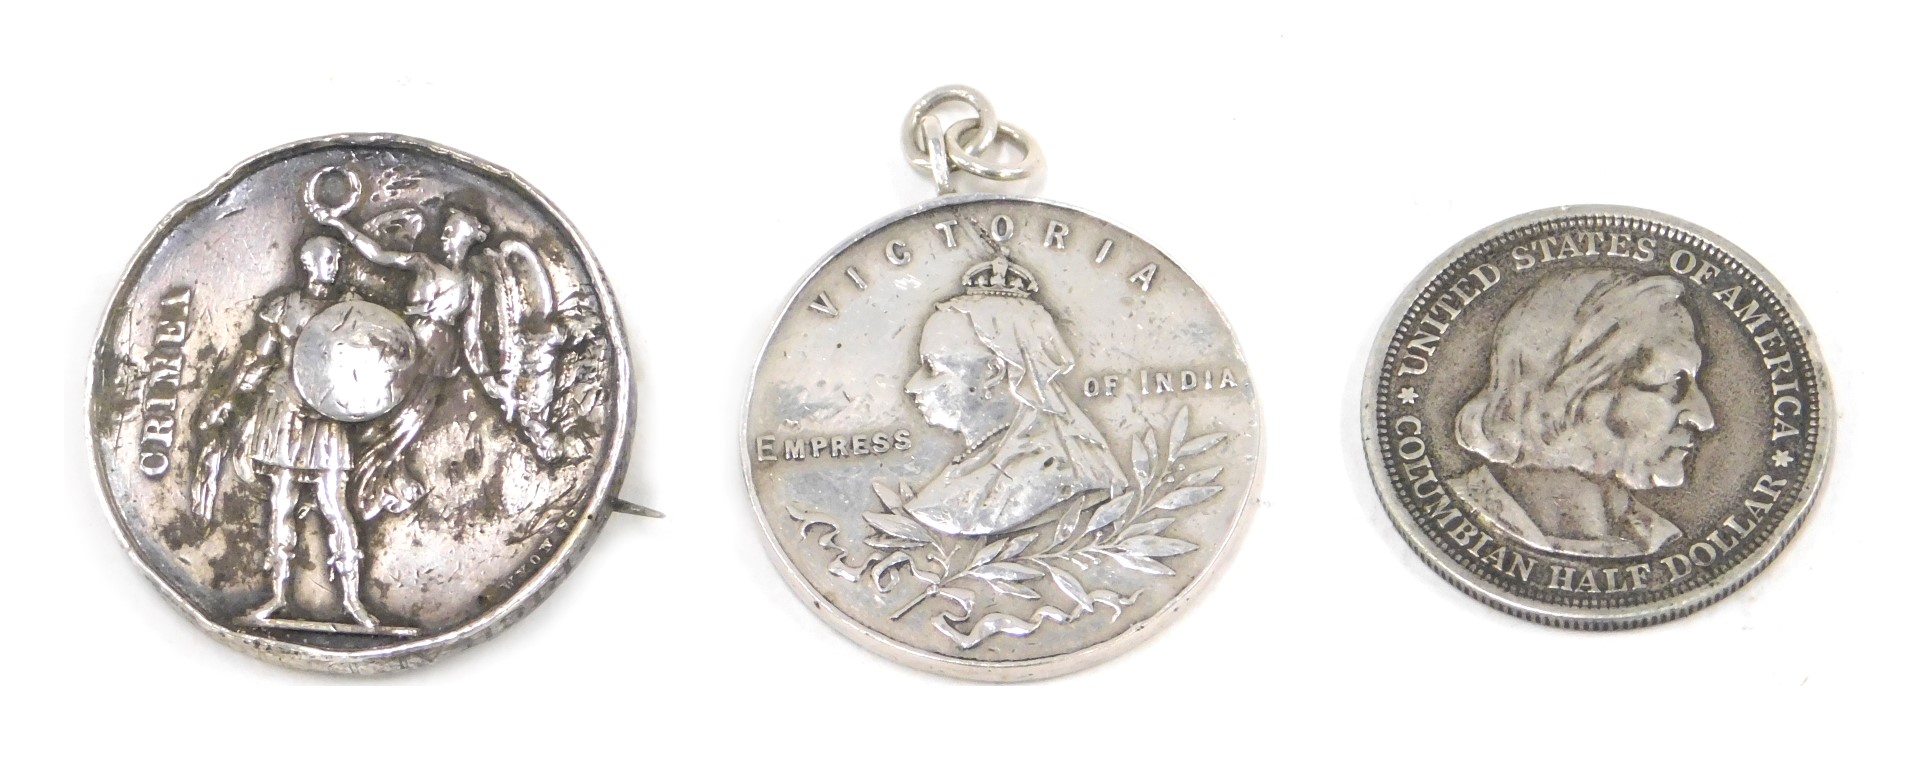 A silver commemorative Victoria medal, dated 1901, a Victoria silver crown dated 1874 converted to a